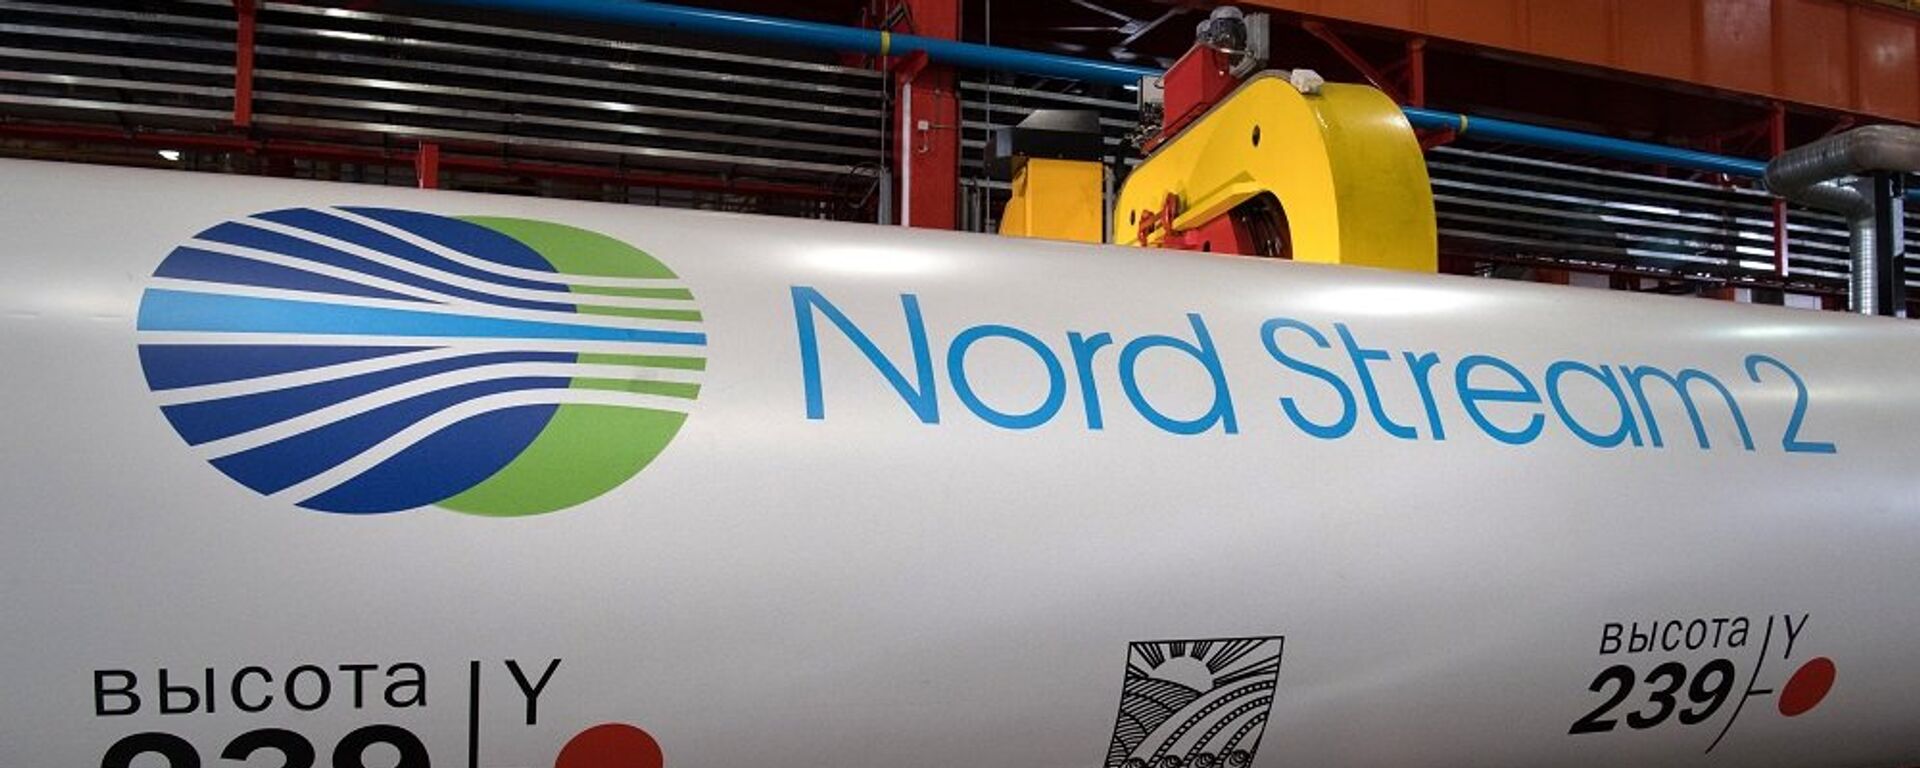 Nord Stream 2公司將評估北溪2號項目對俄環境影響 - 俄羅斯衛星通訊社, 1920, 10.09.2021